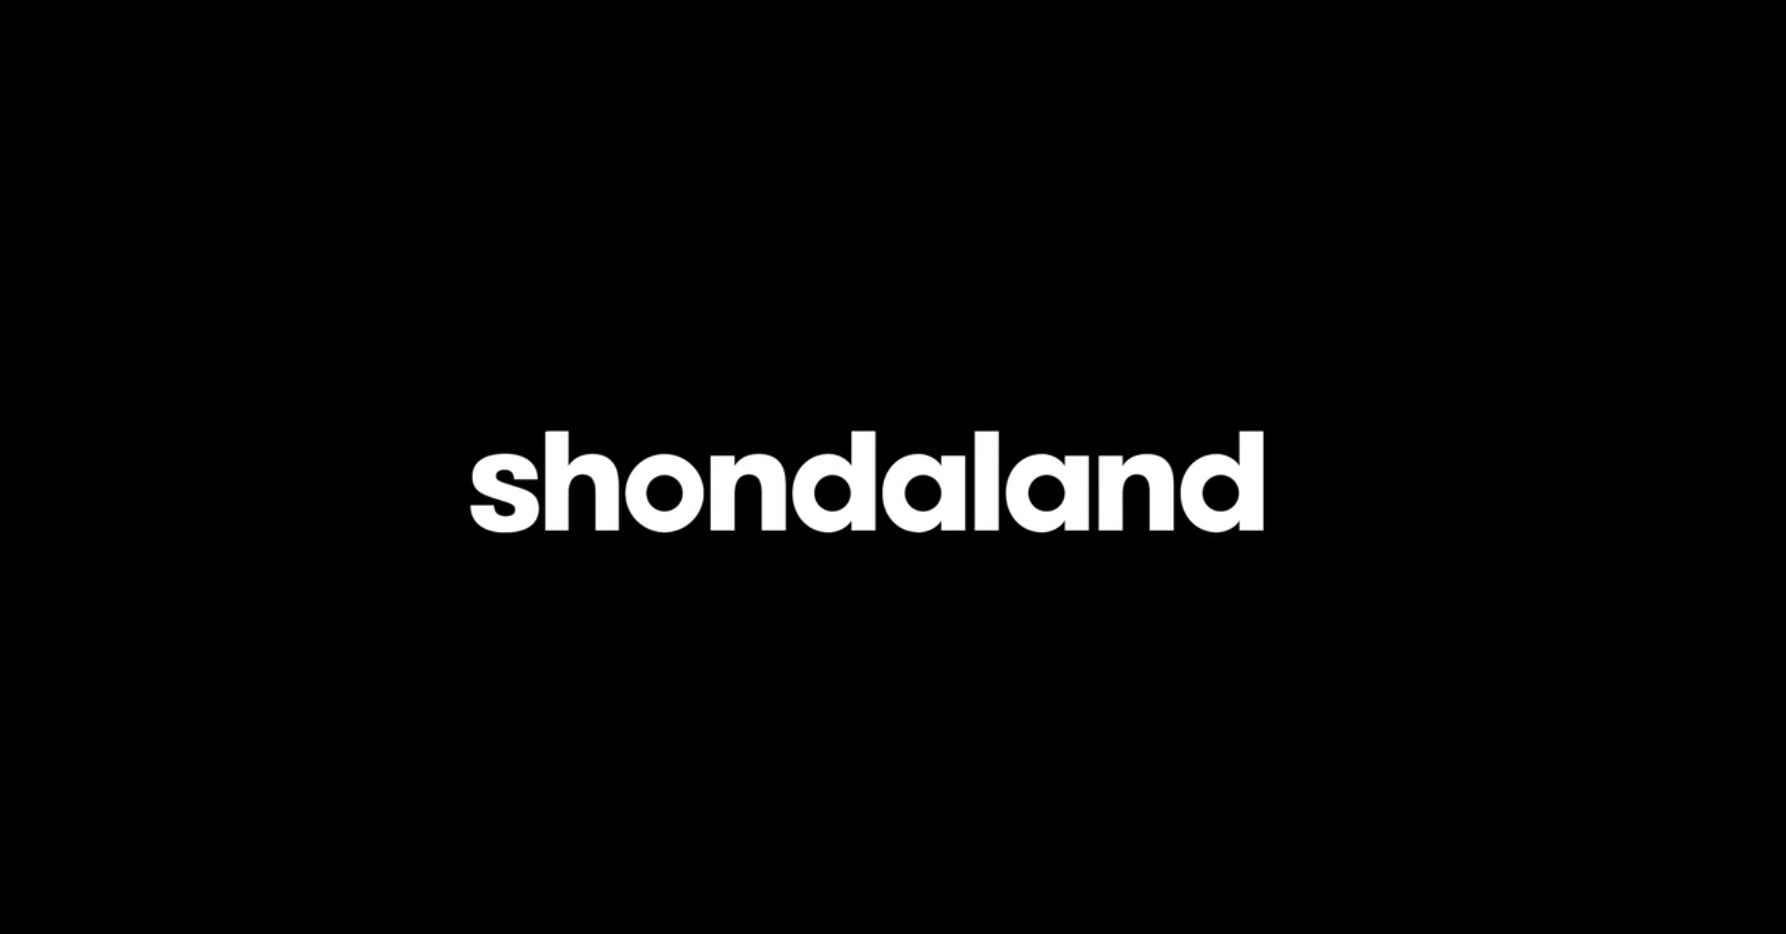 Screen card for Shondaland